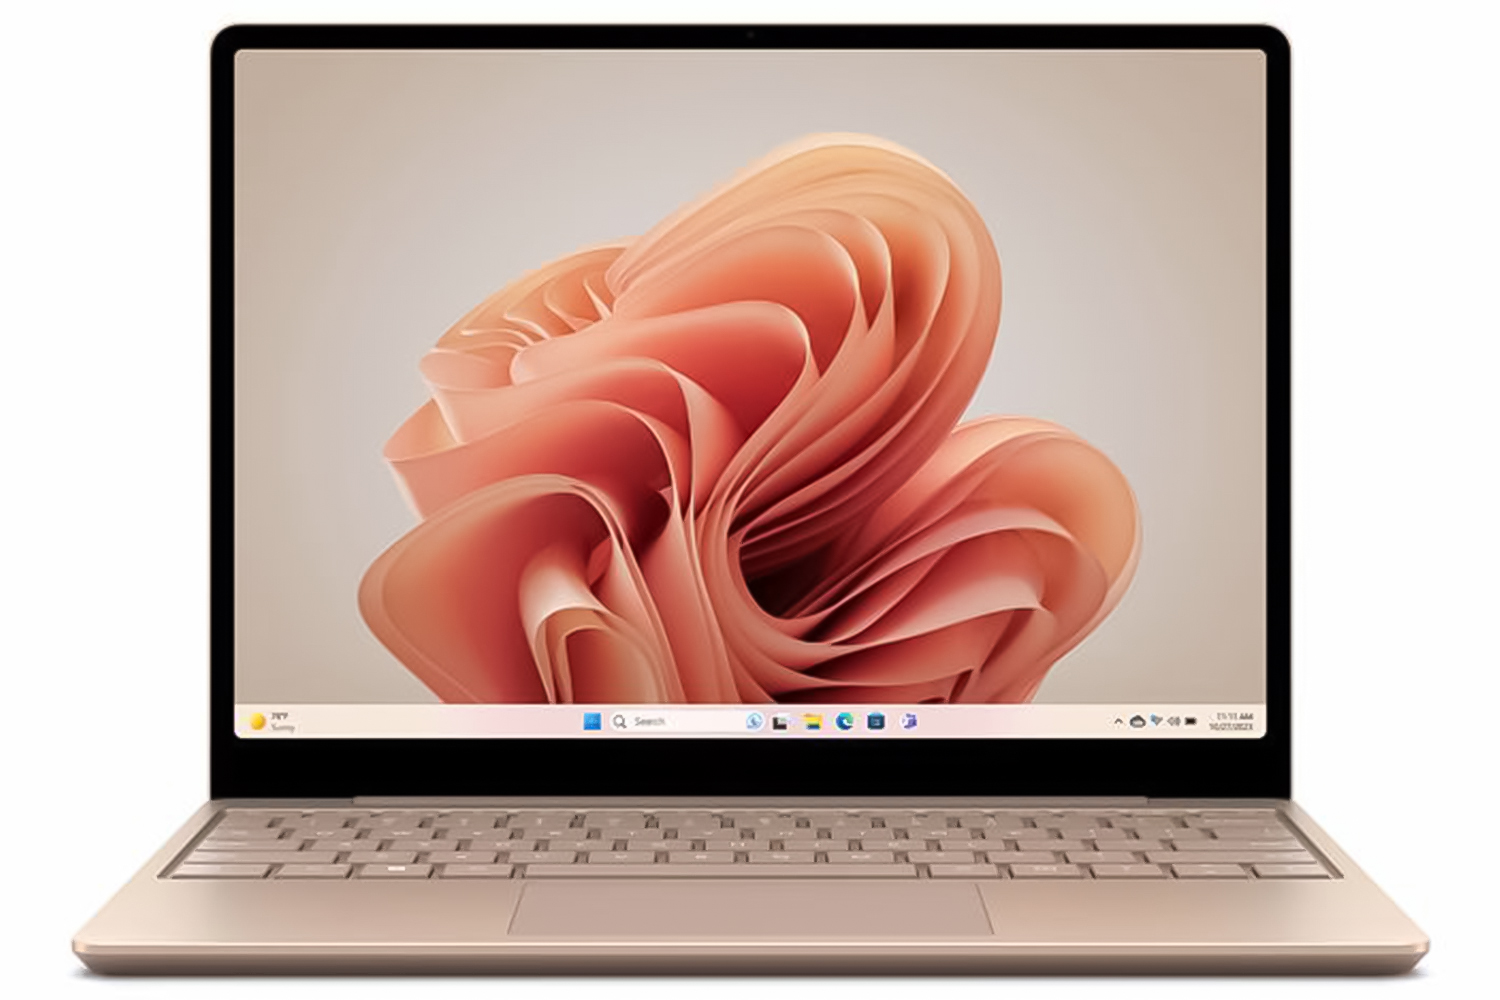 Microsoft Surface Laptop Go 3 向けの 180度 覗き見防止 フィルム 曲面対応 アンチグレア 日本製